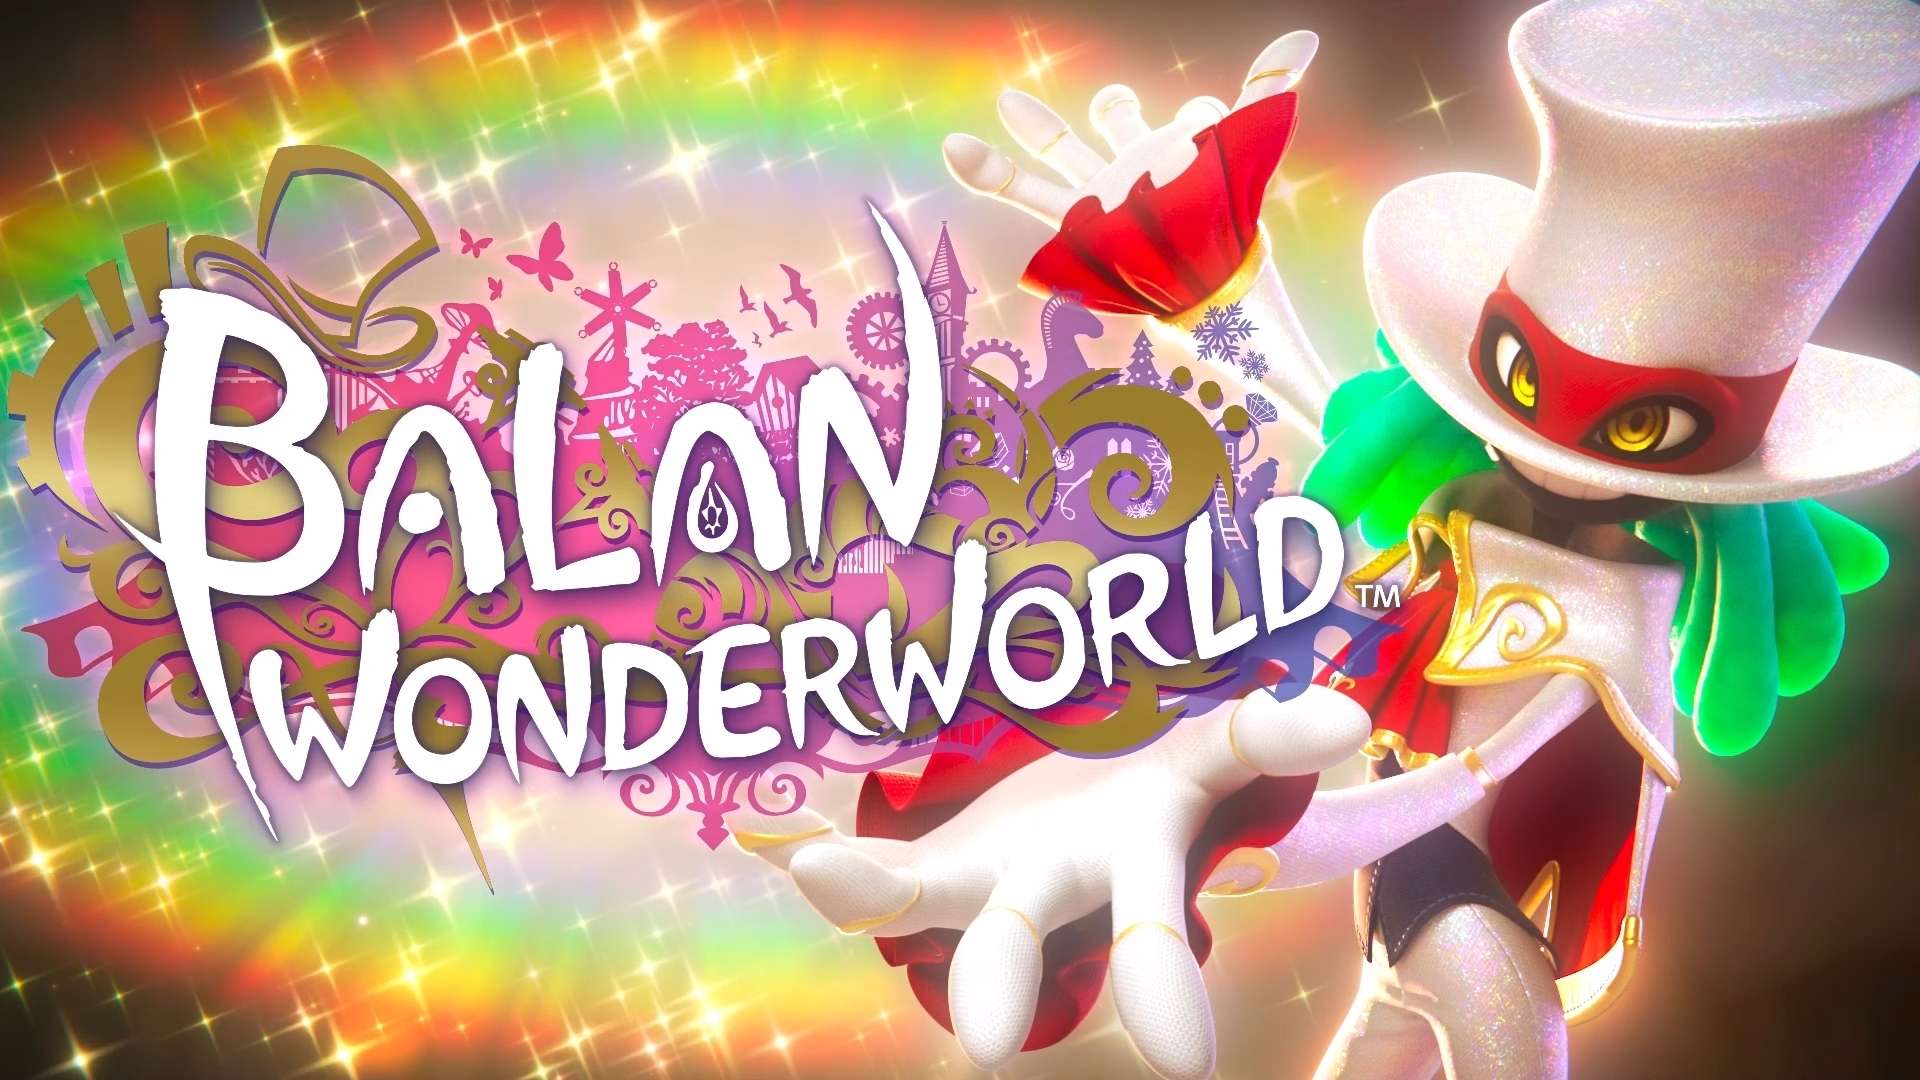 Análisis de Balan Wonderworld